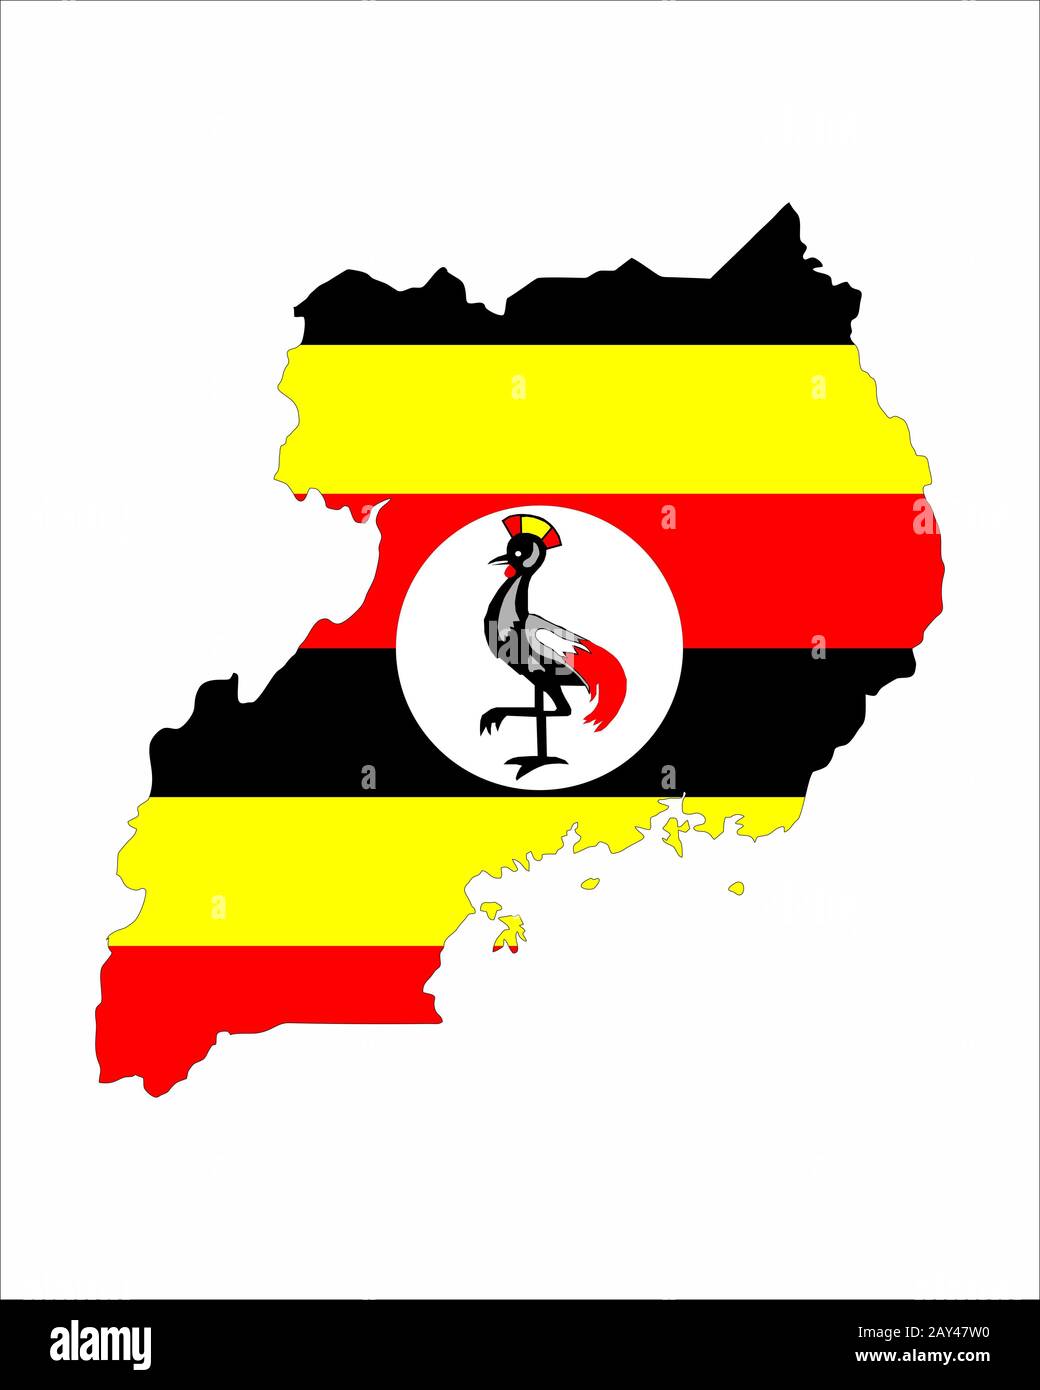 uganda flag map Stock Photo